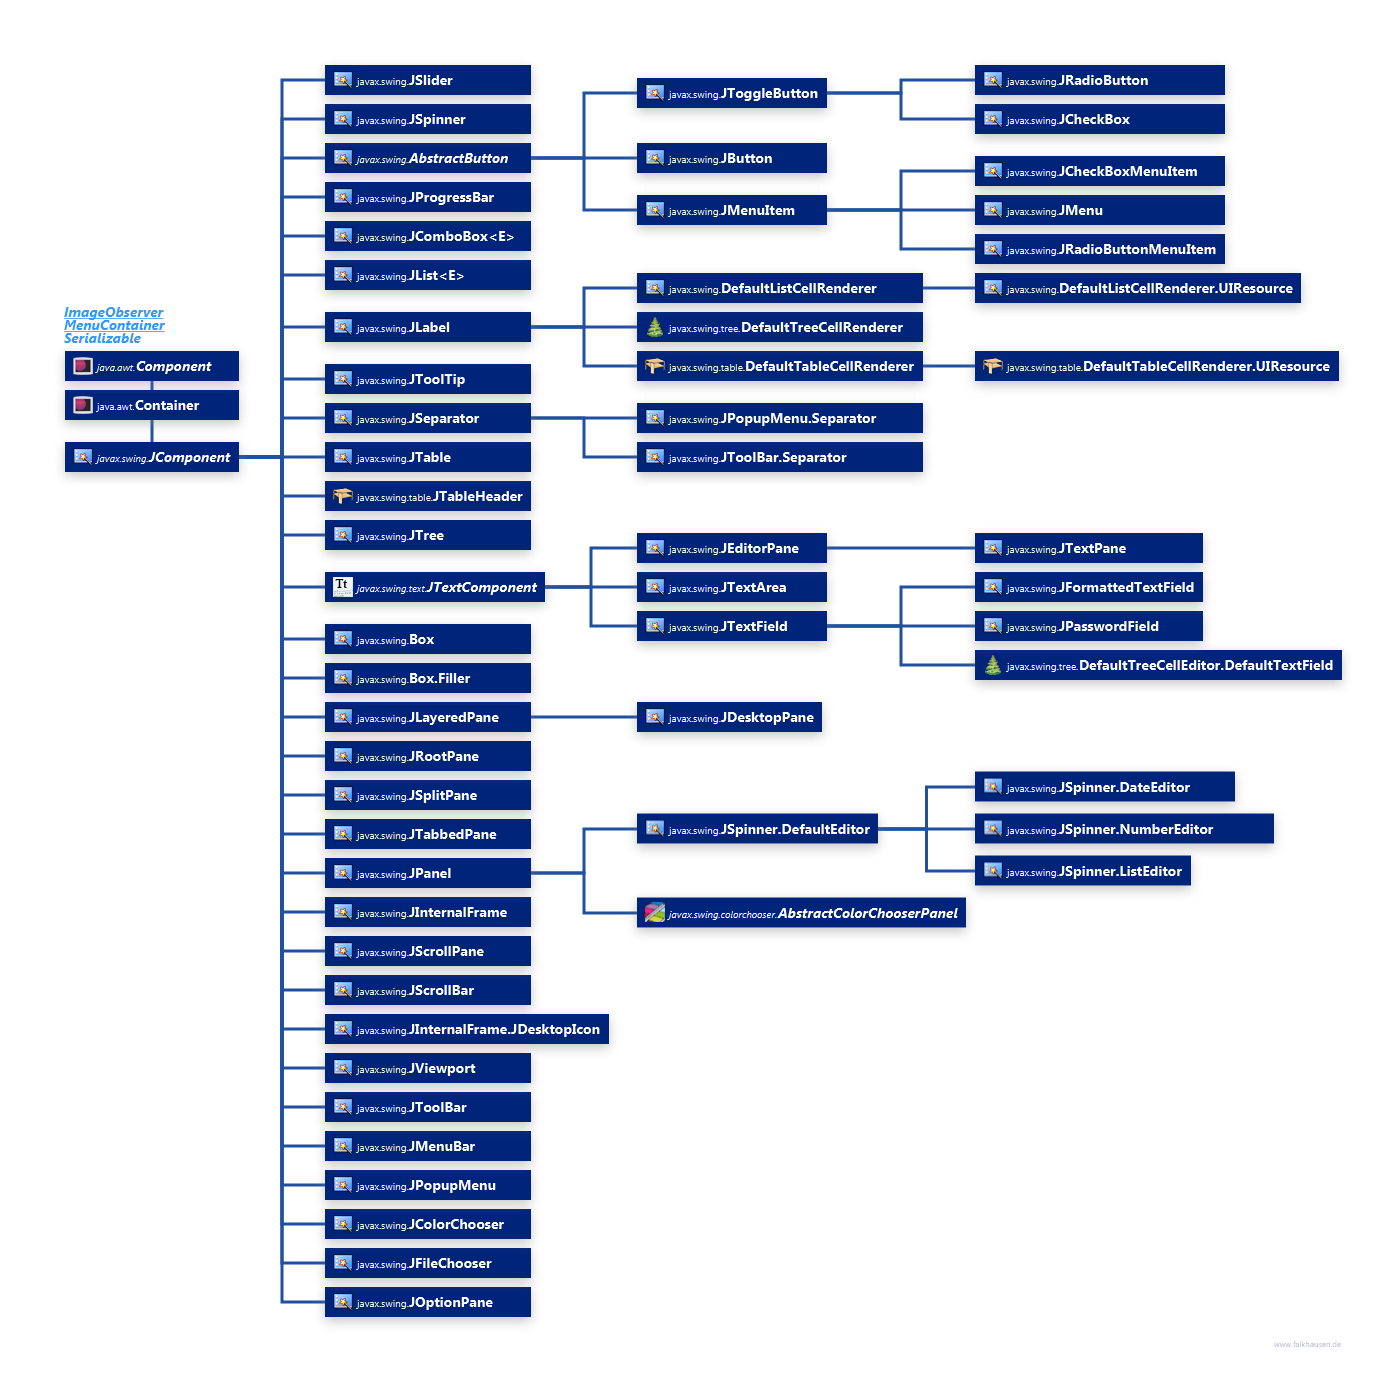 JComponent Hierarchy class diagram and api documentation for Java 8